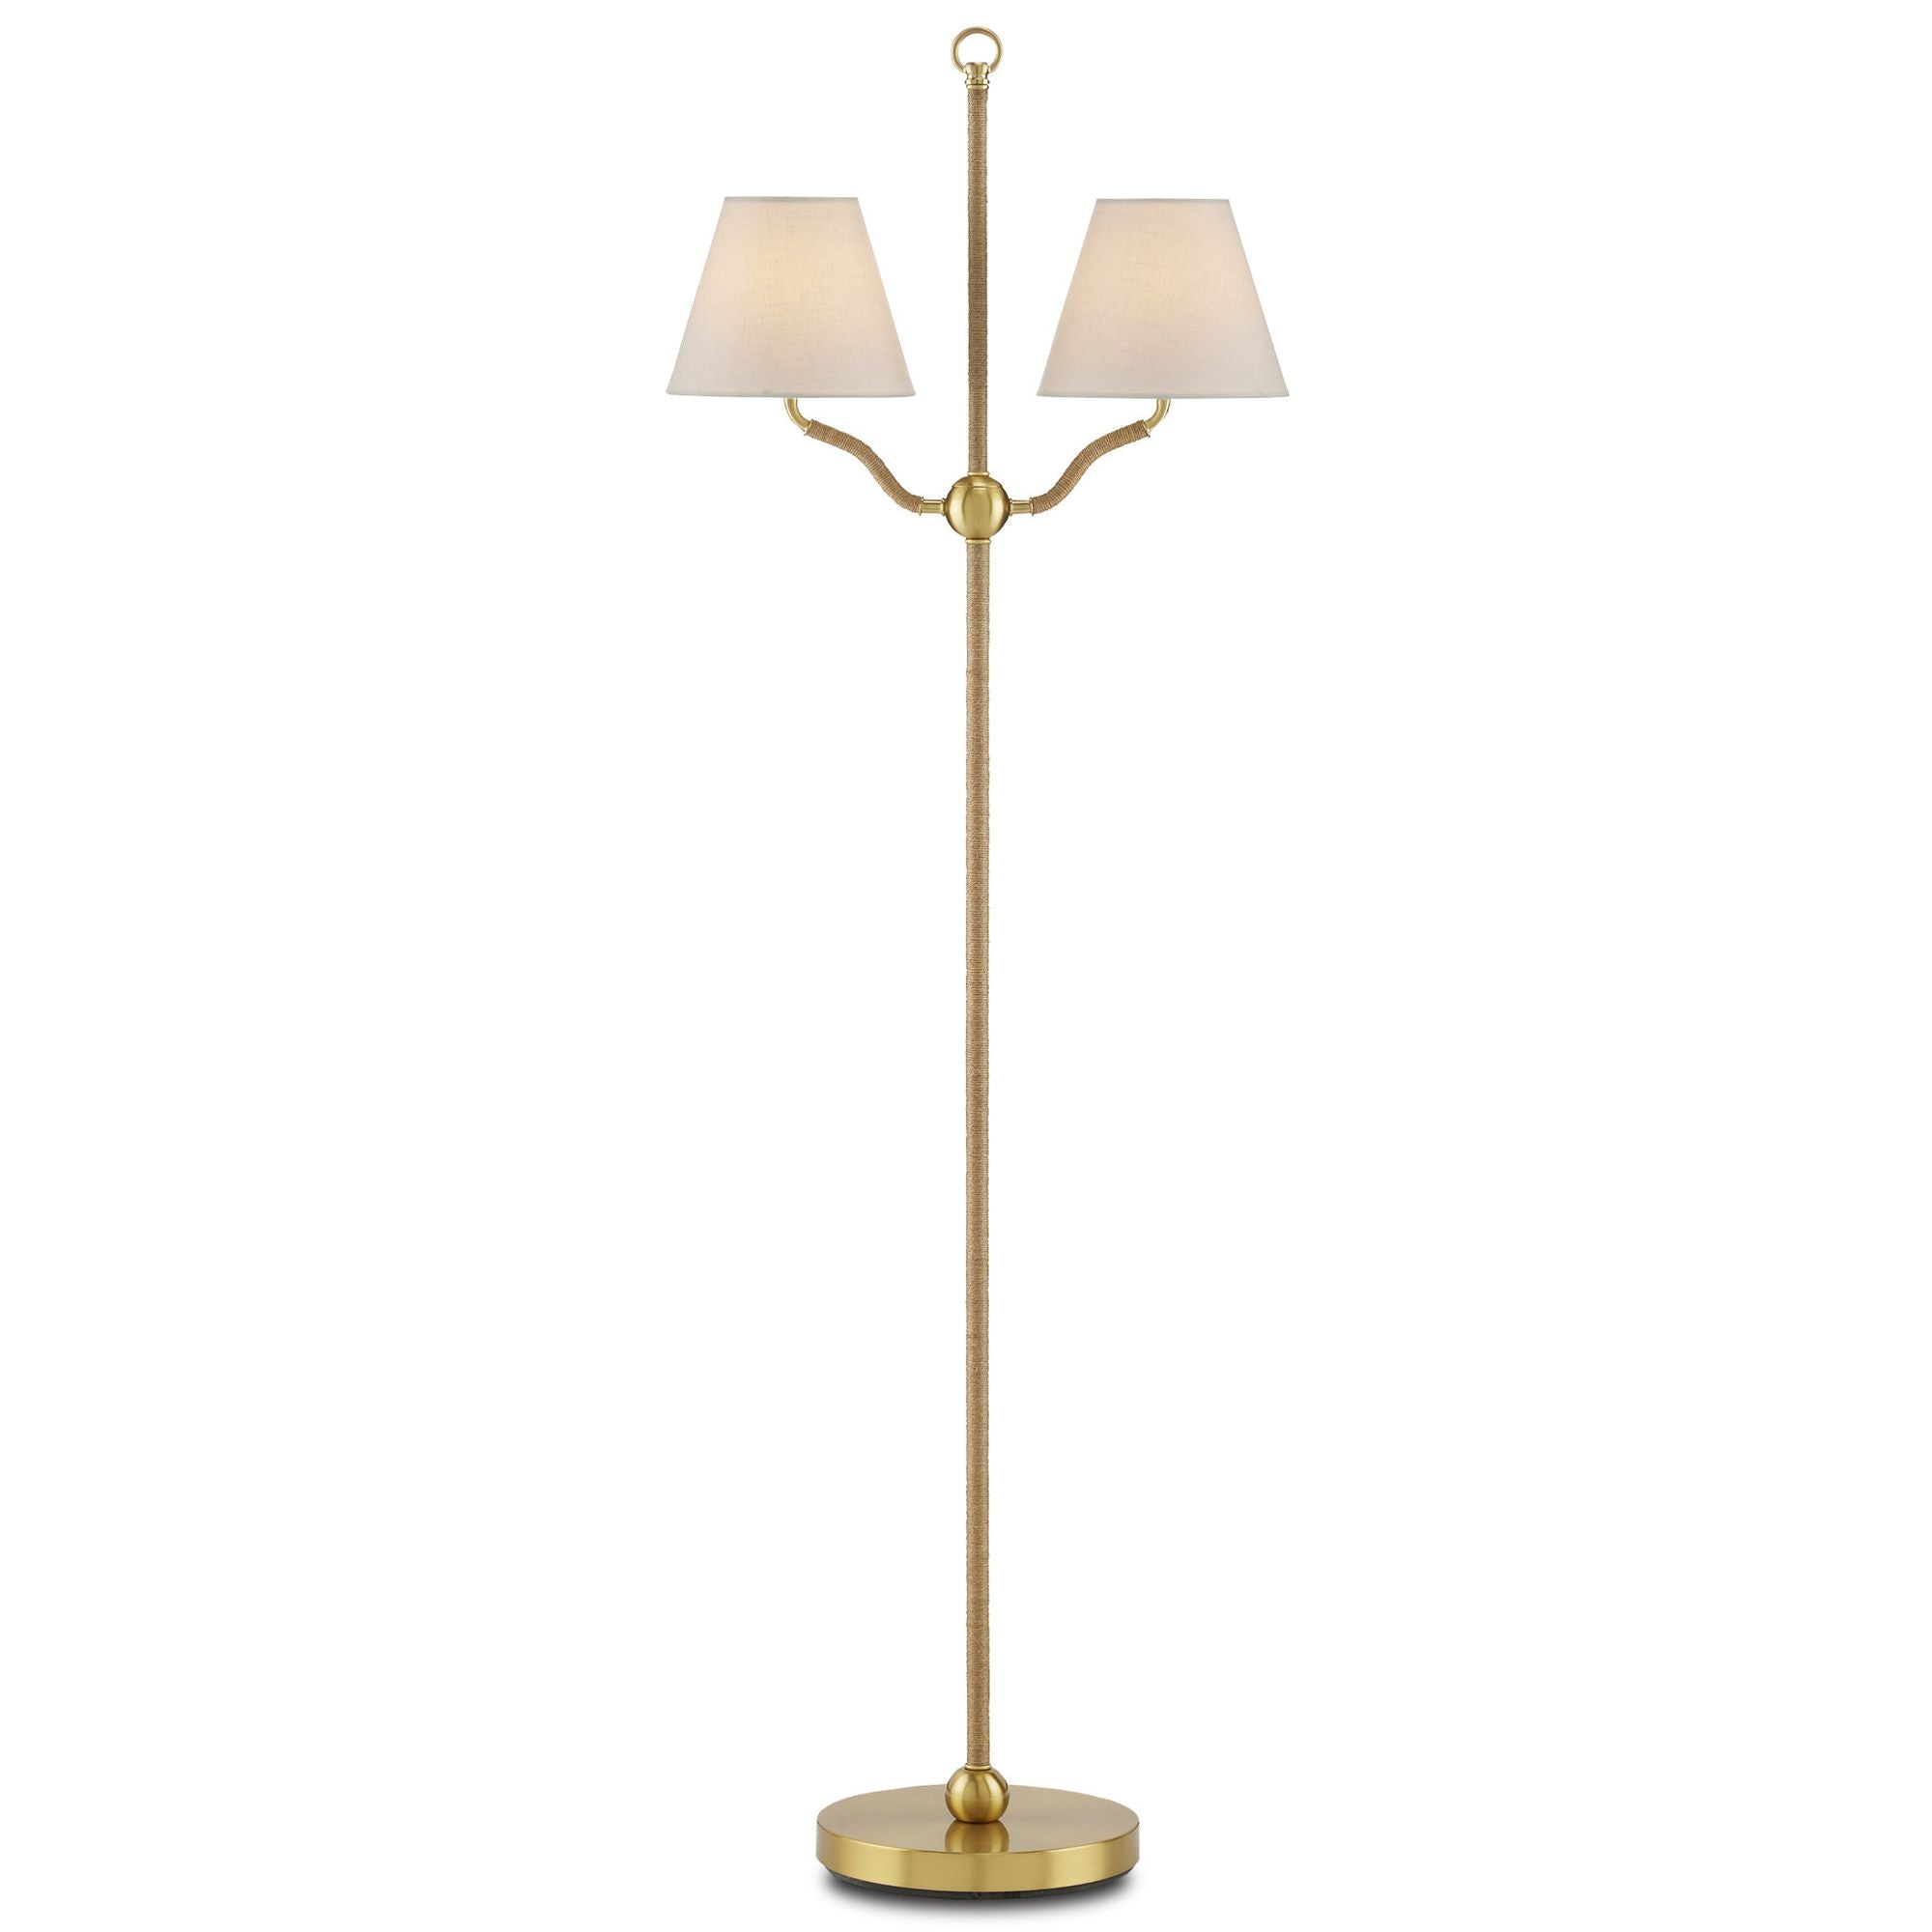 Maxstoke Brass Floor Lamp - Antique Brass